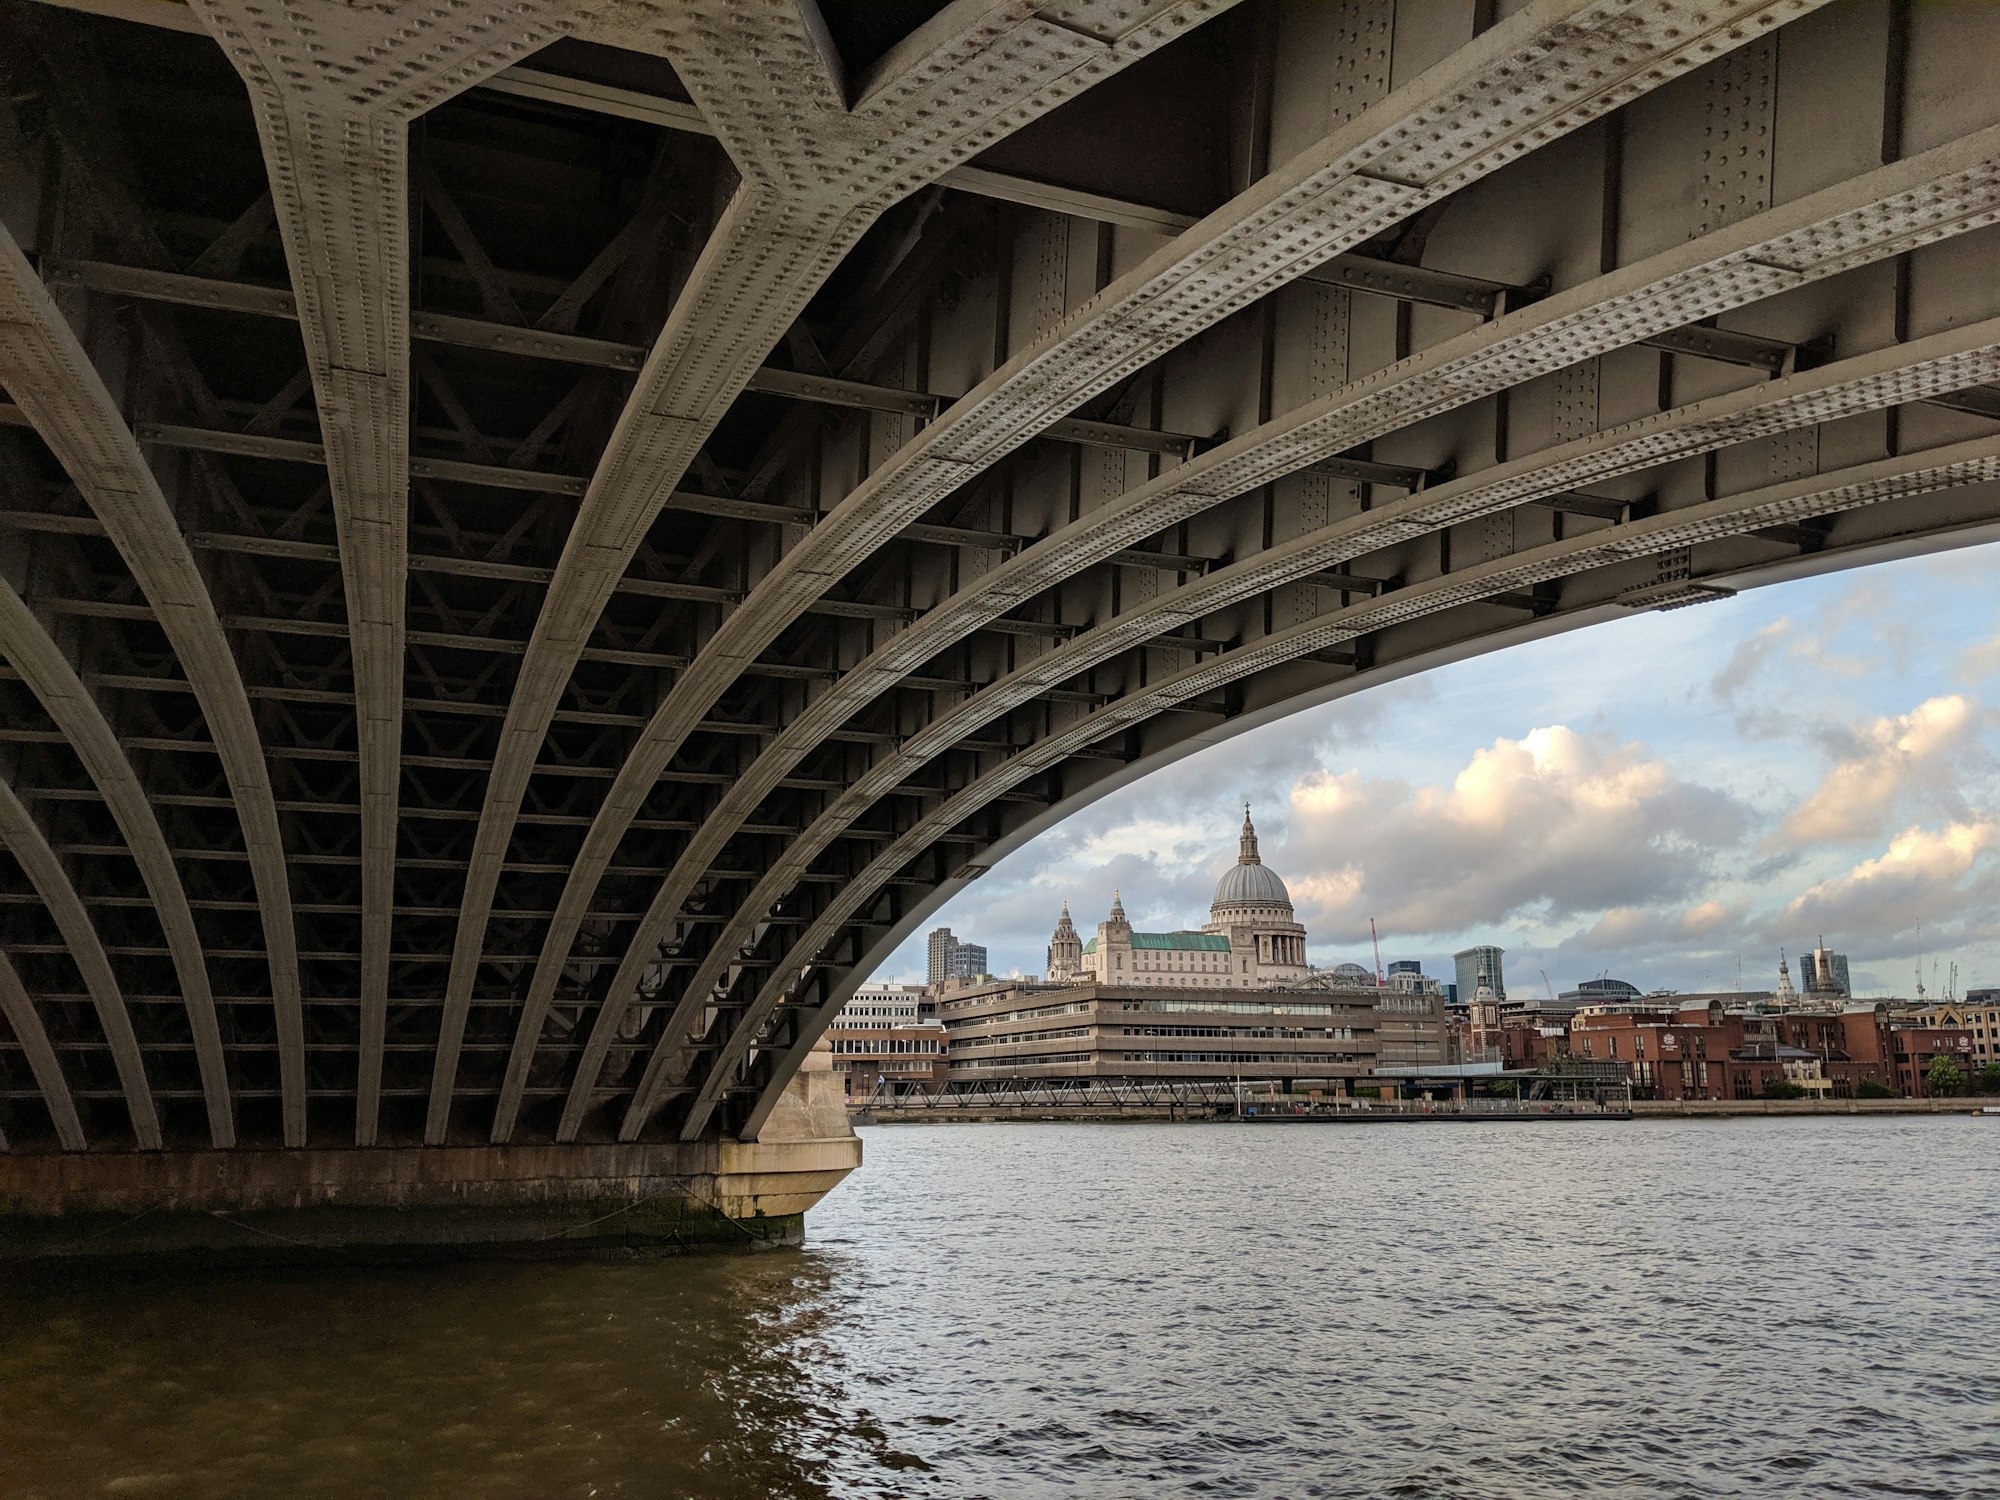 grey concrete buildings near body of water through bridge